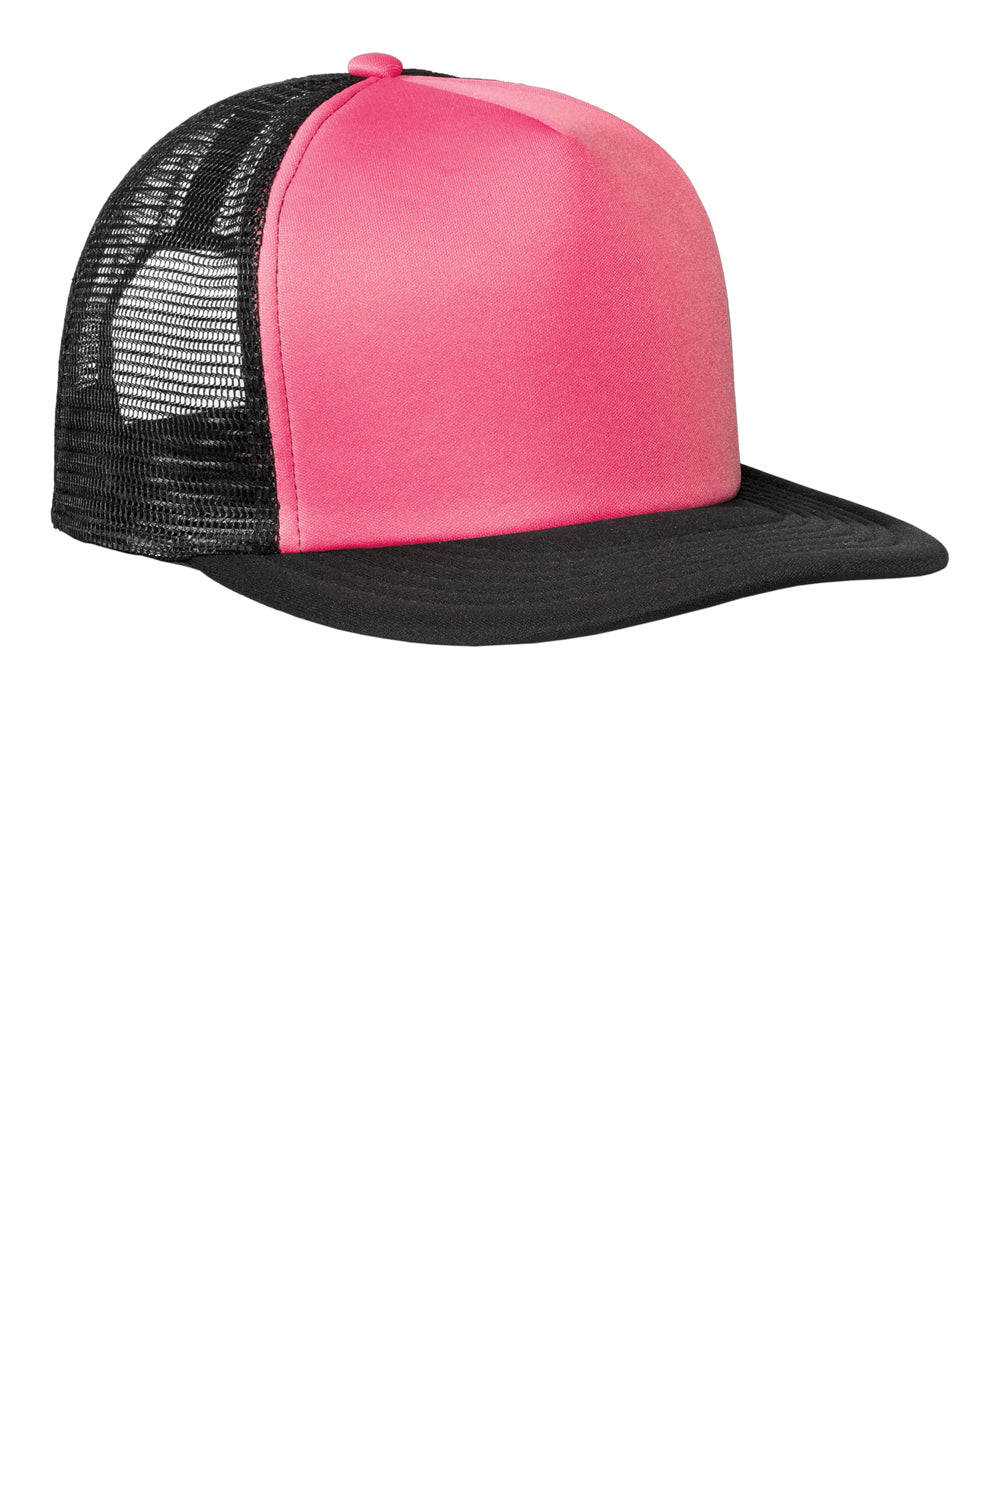 District DT624 Flat Bill Snapback Trucker Hat Neon Pink Front